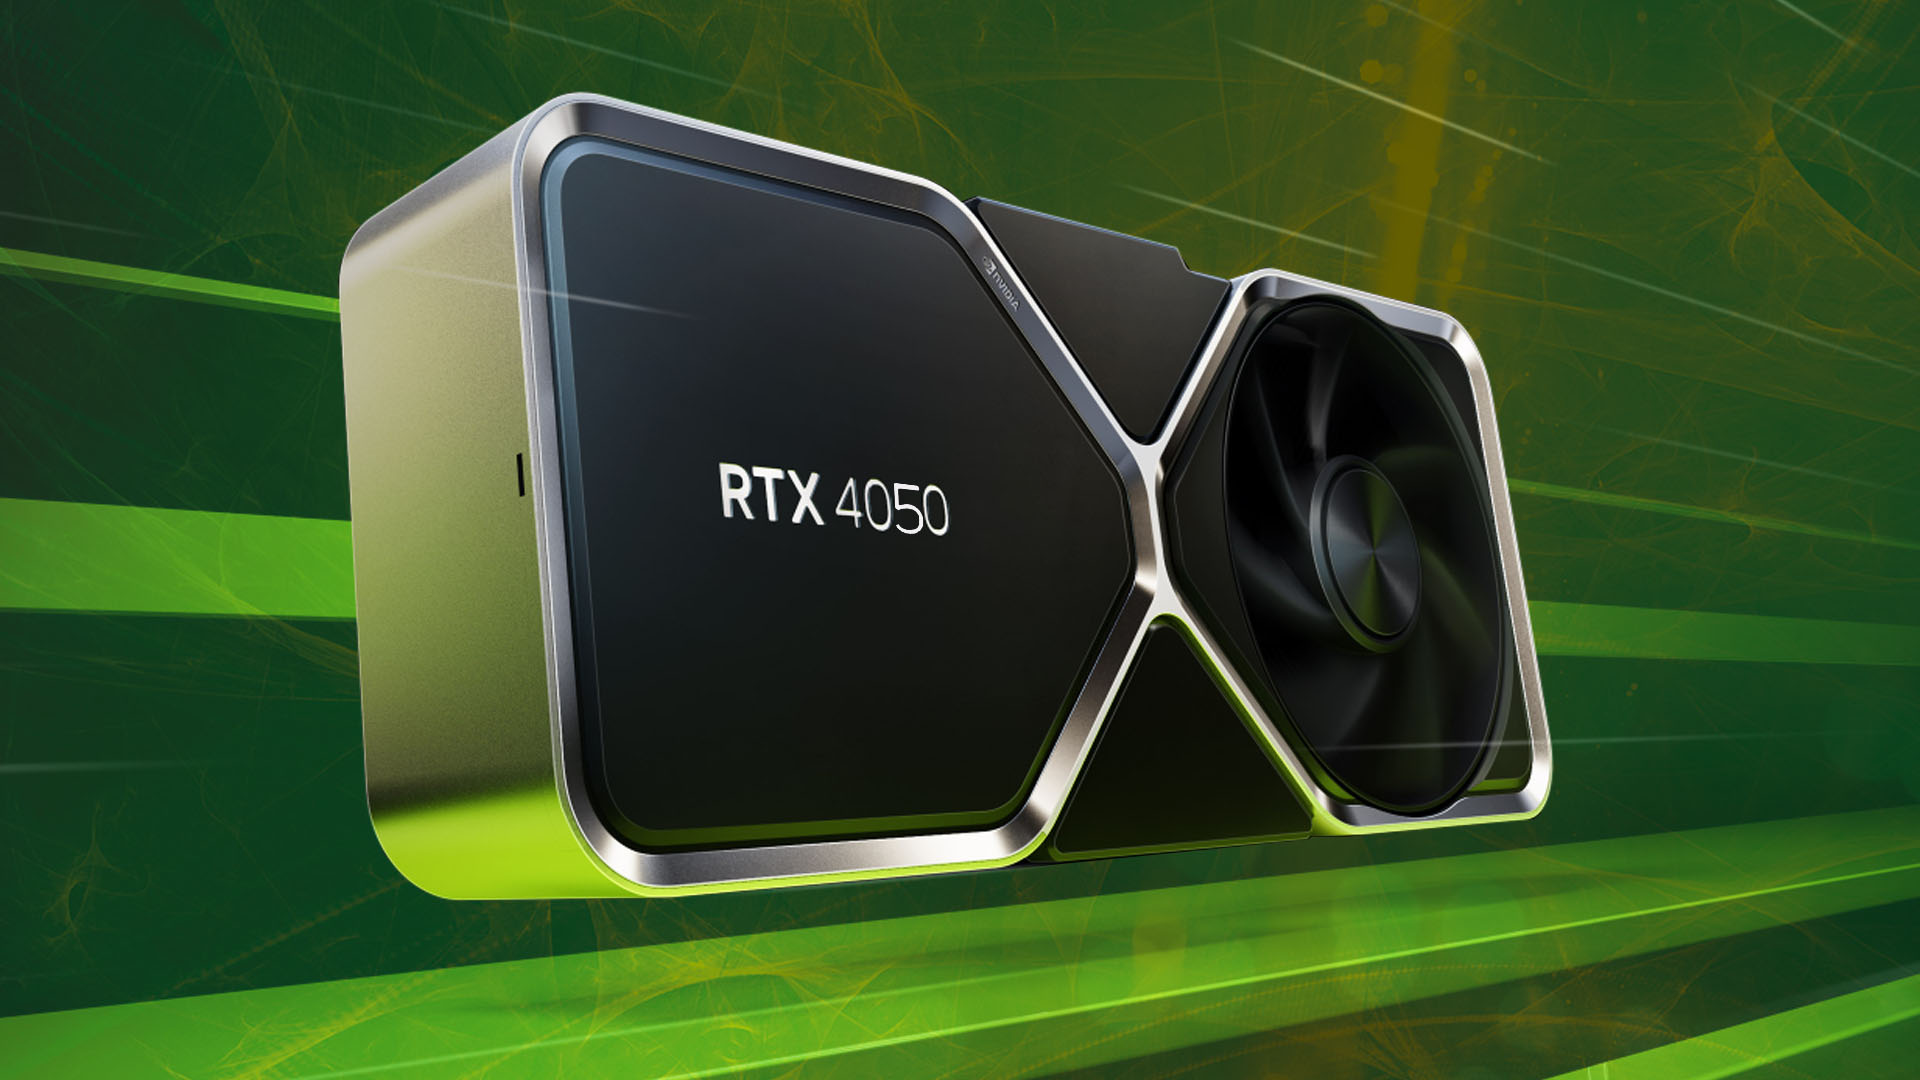 NVIDIA GeForce RTX 4050 Specs